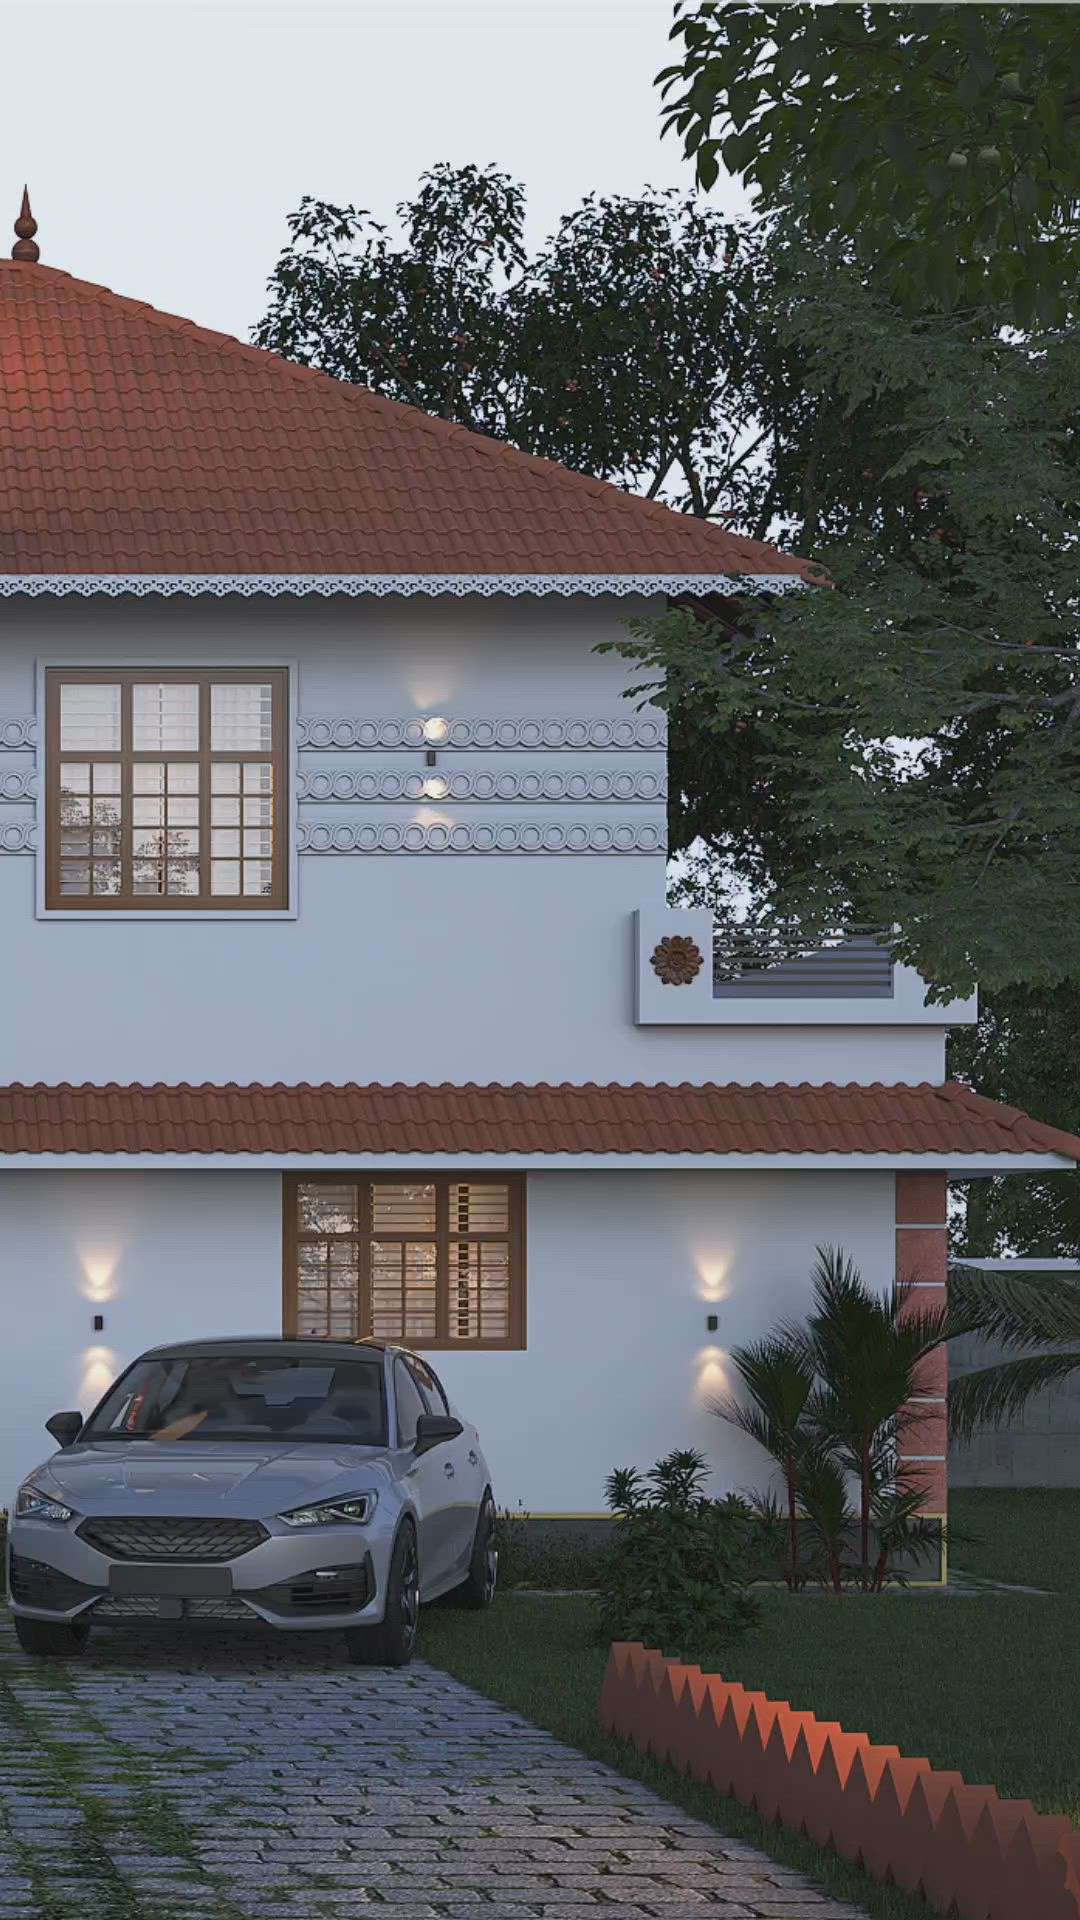 Traditional home design 🏠
Renovation work... 
 #keralatraditionalhomes  #KeralaStyleHouse  #keralastyle